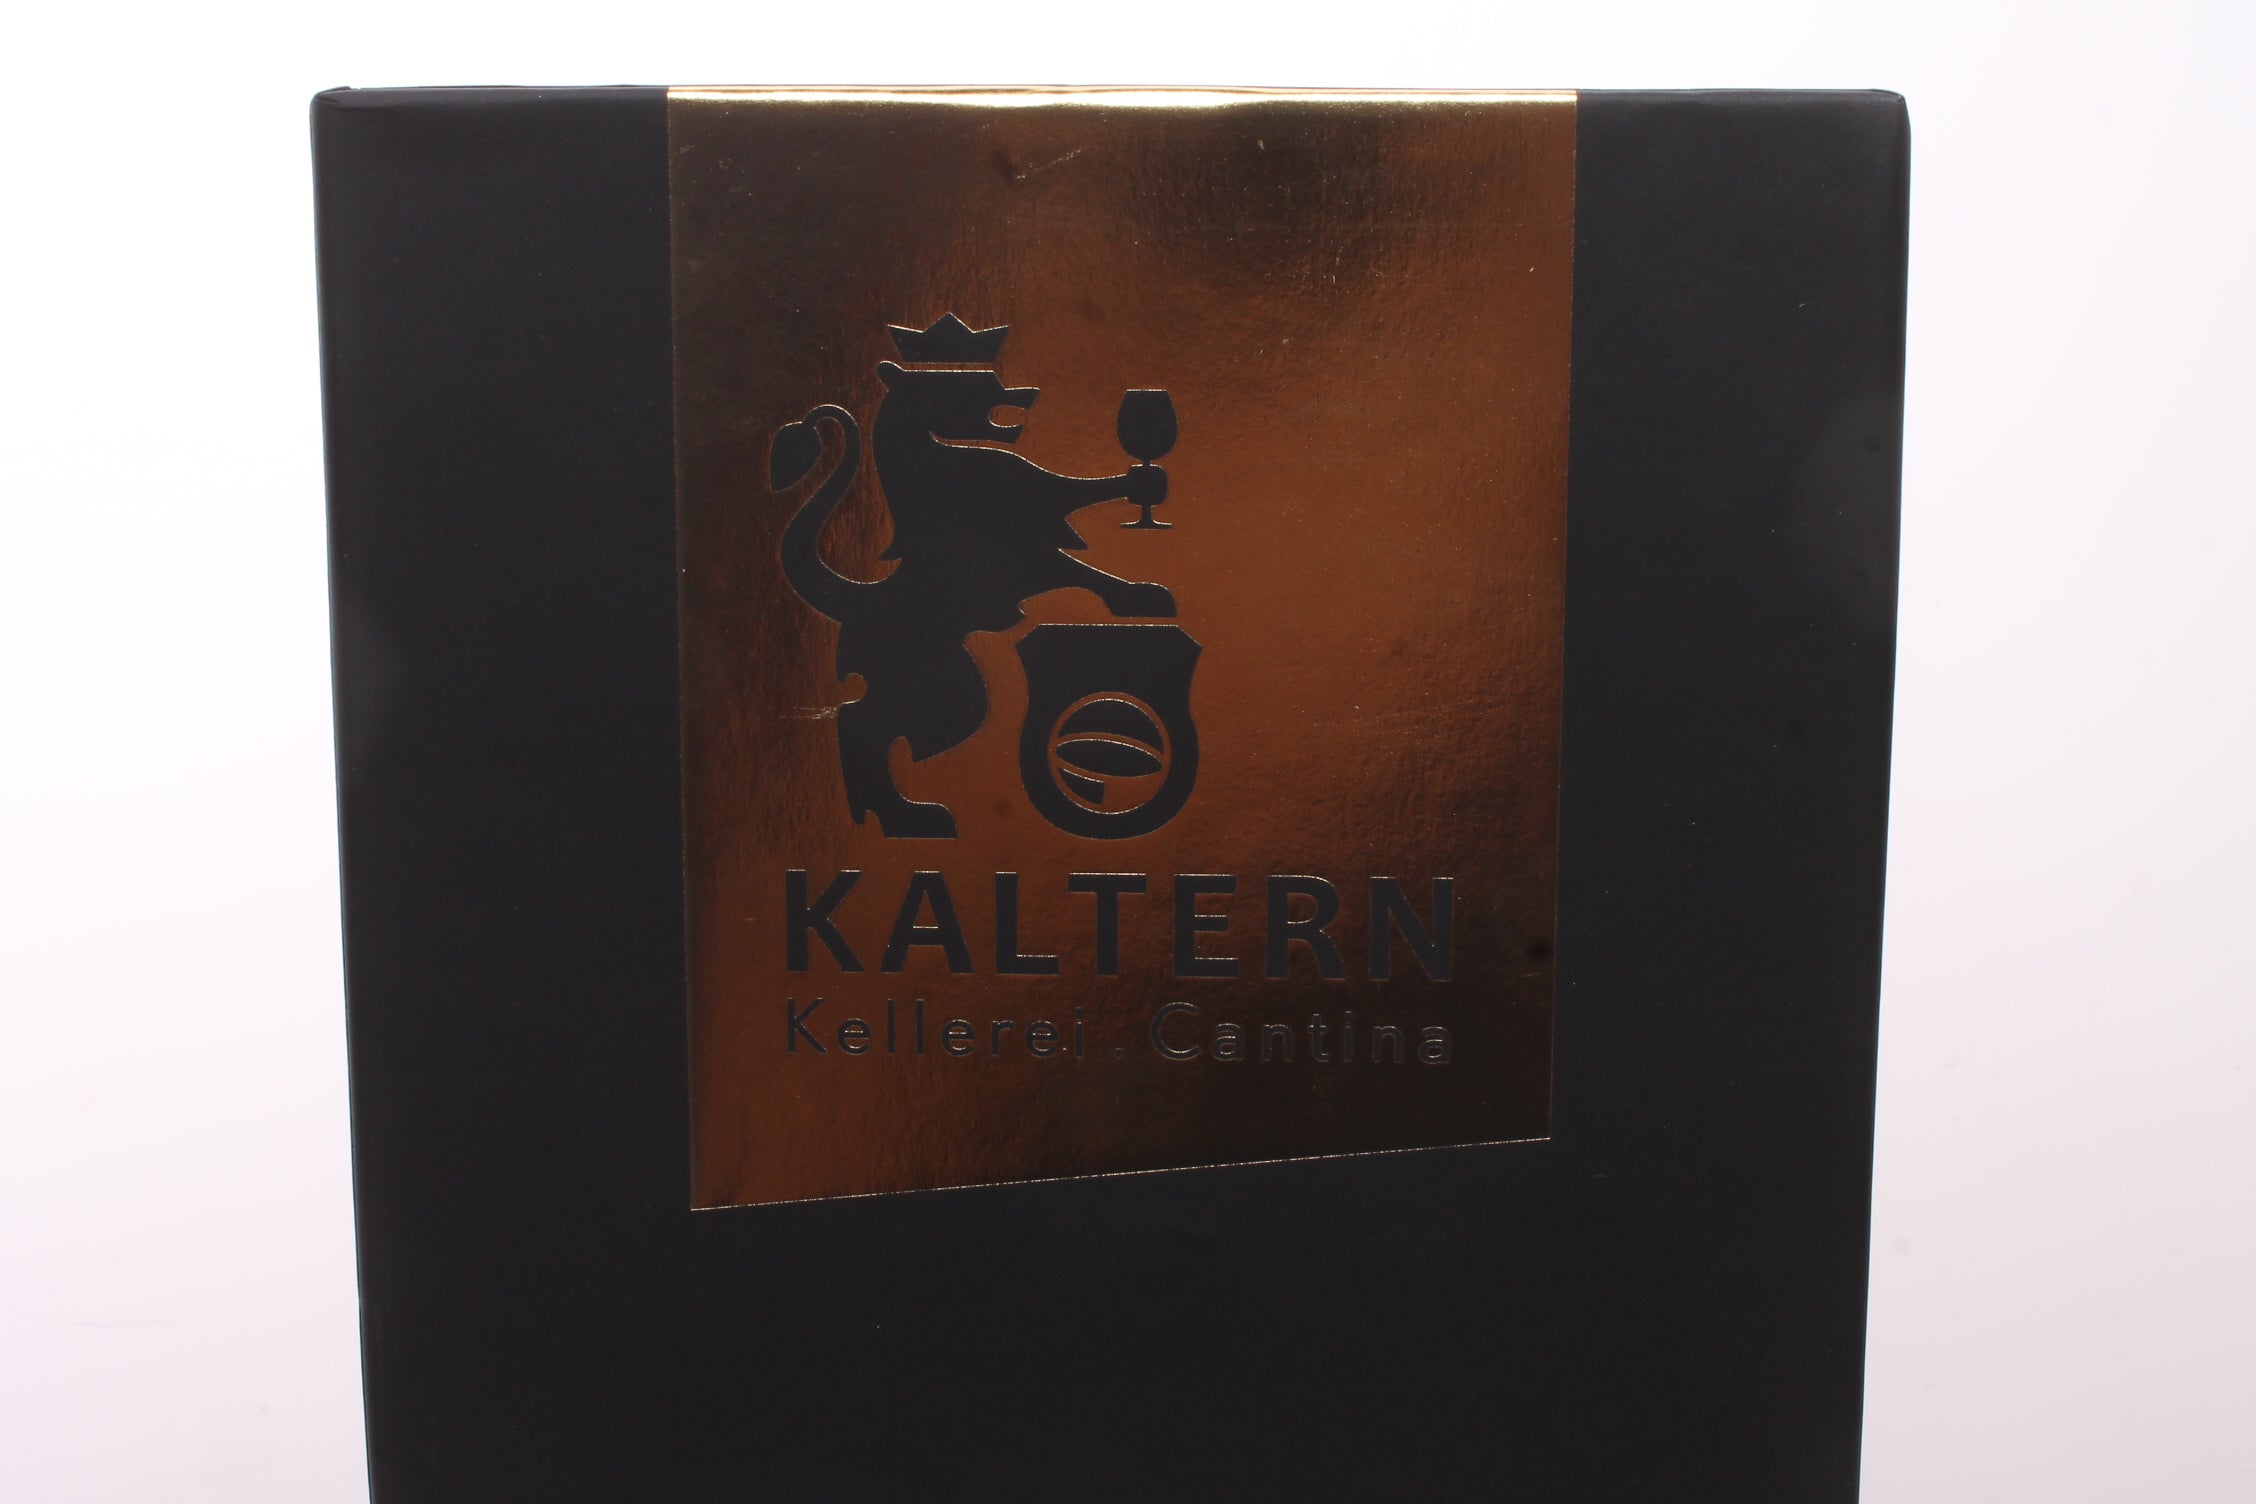 Kellerei Kaltern, Kunst Stuck Pinot Bianco, Alto Adige 2014 - 1x150cl